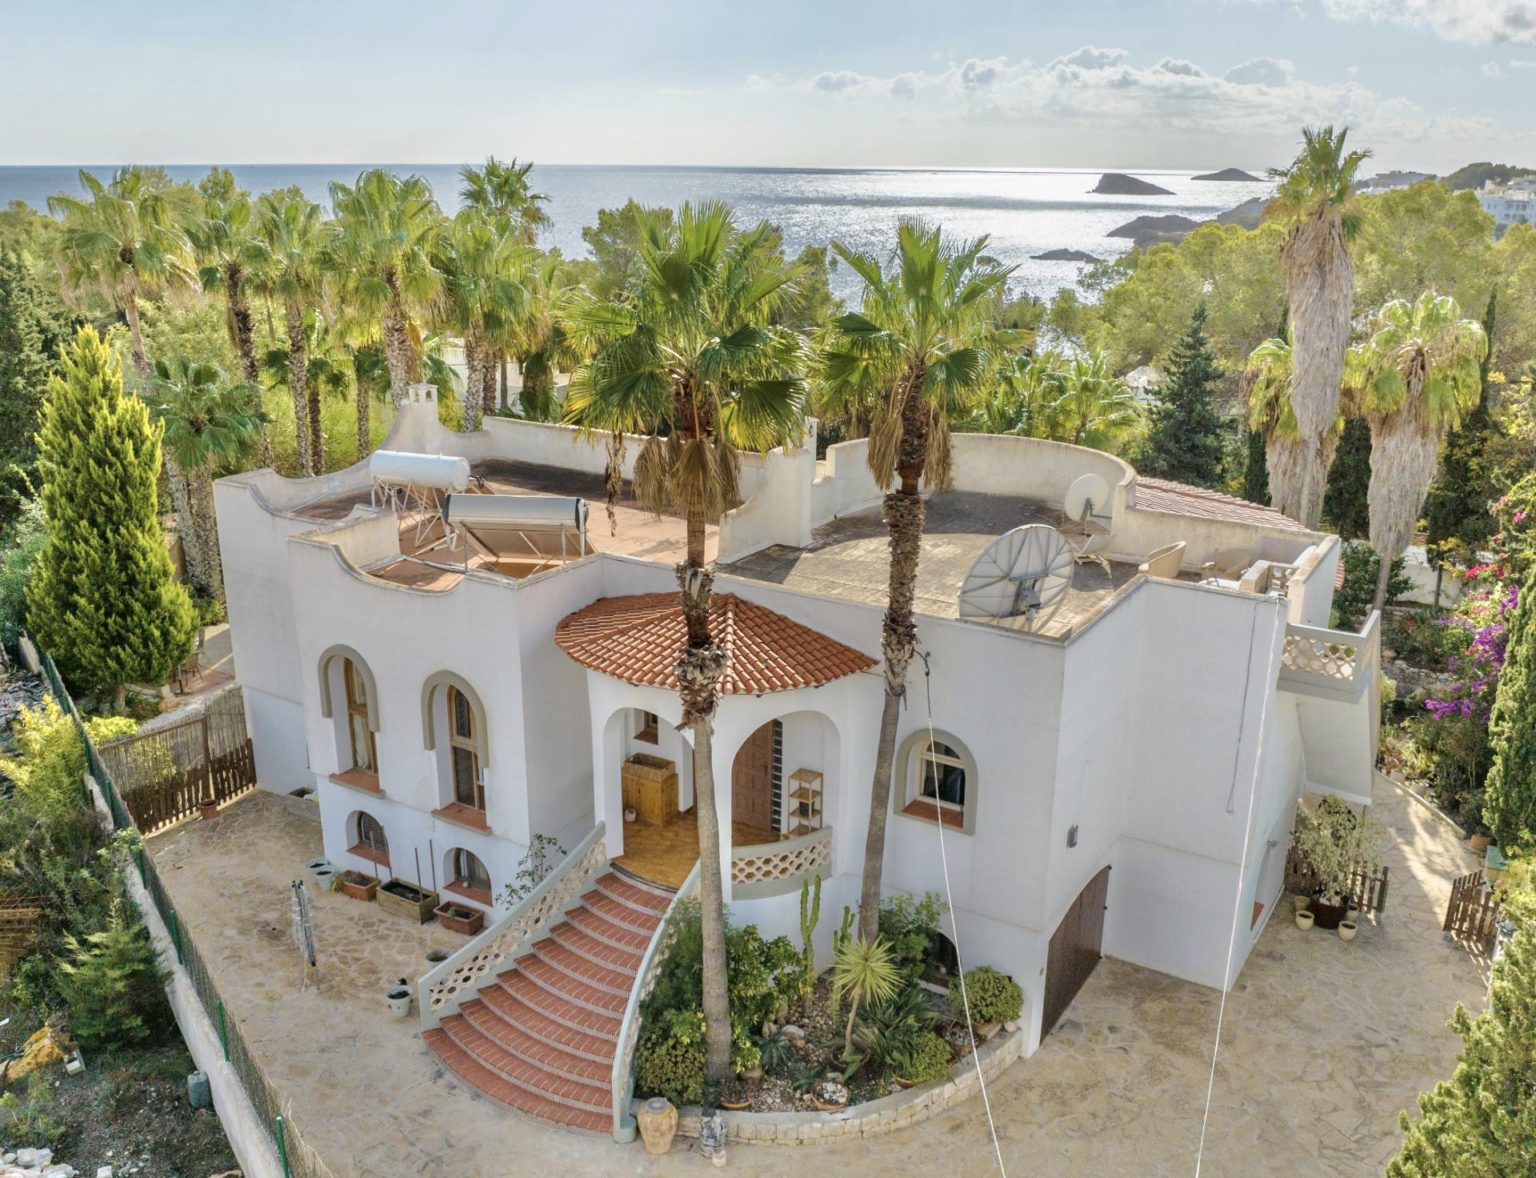 Villa mit großem Potenzial in Gehweite zum Meer